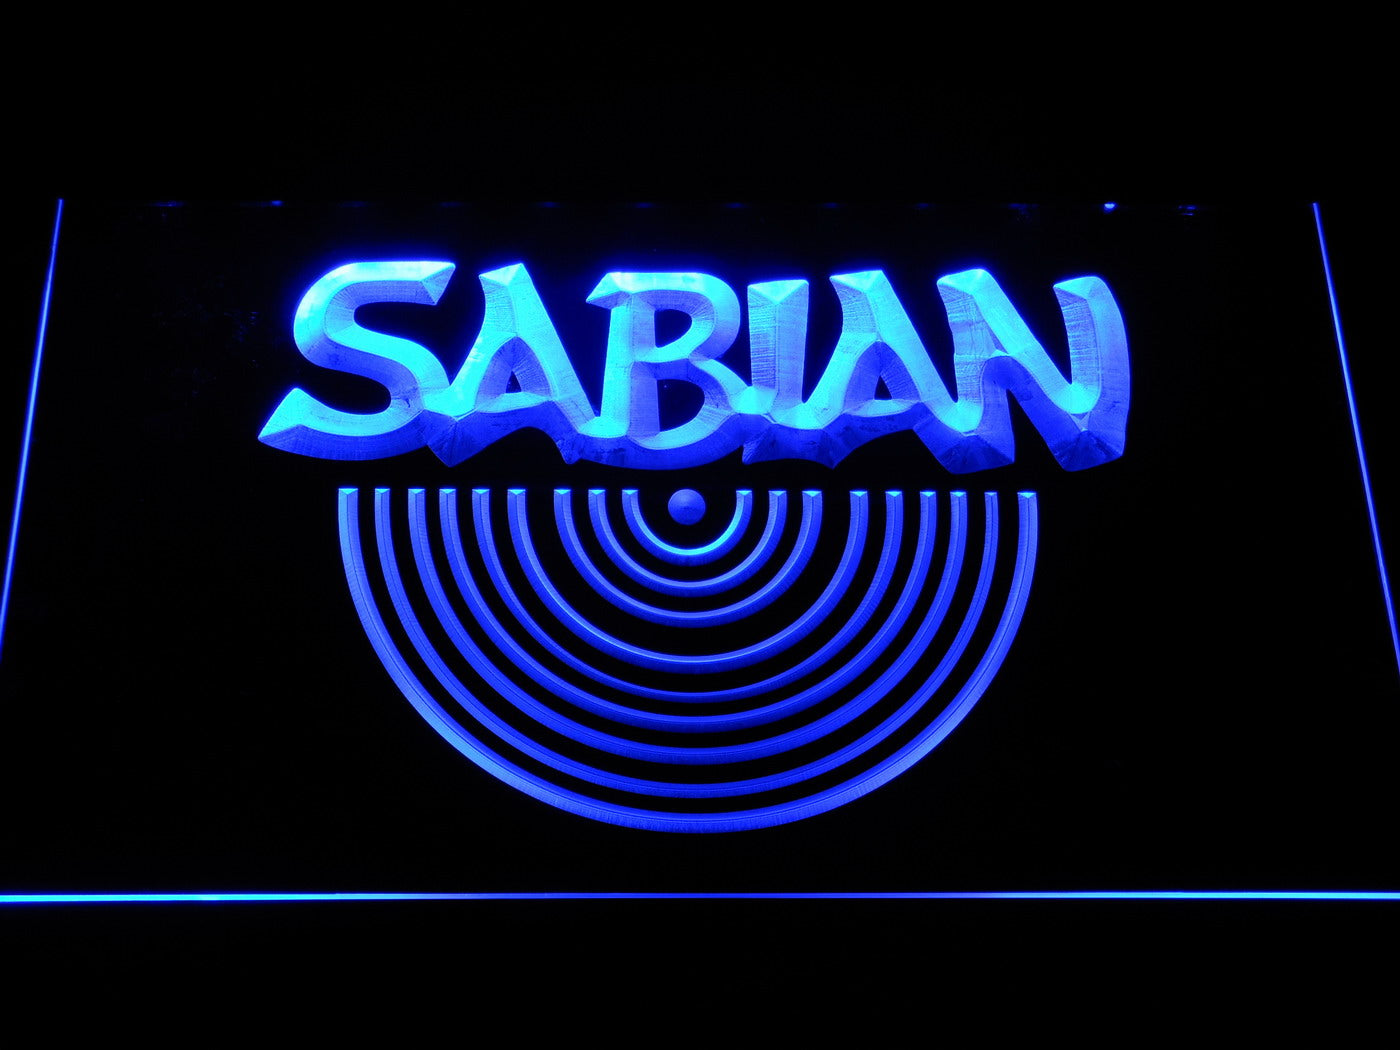 Sabian Band LED Neon Sign